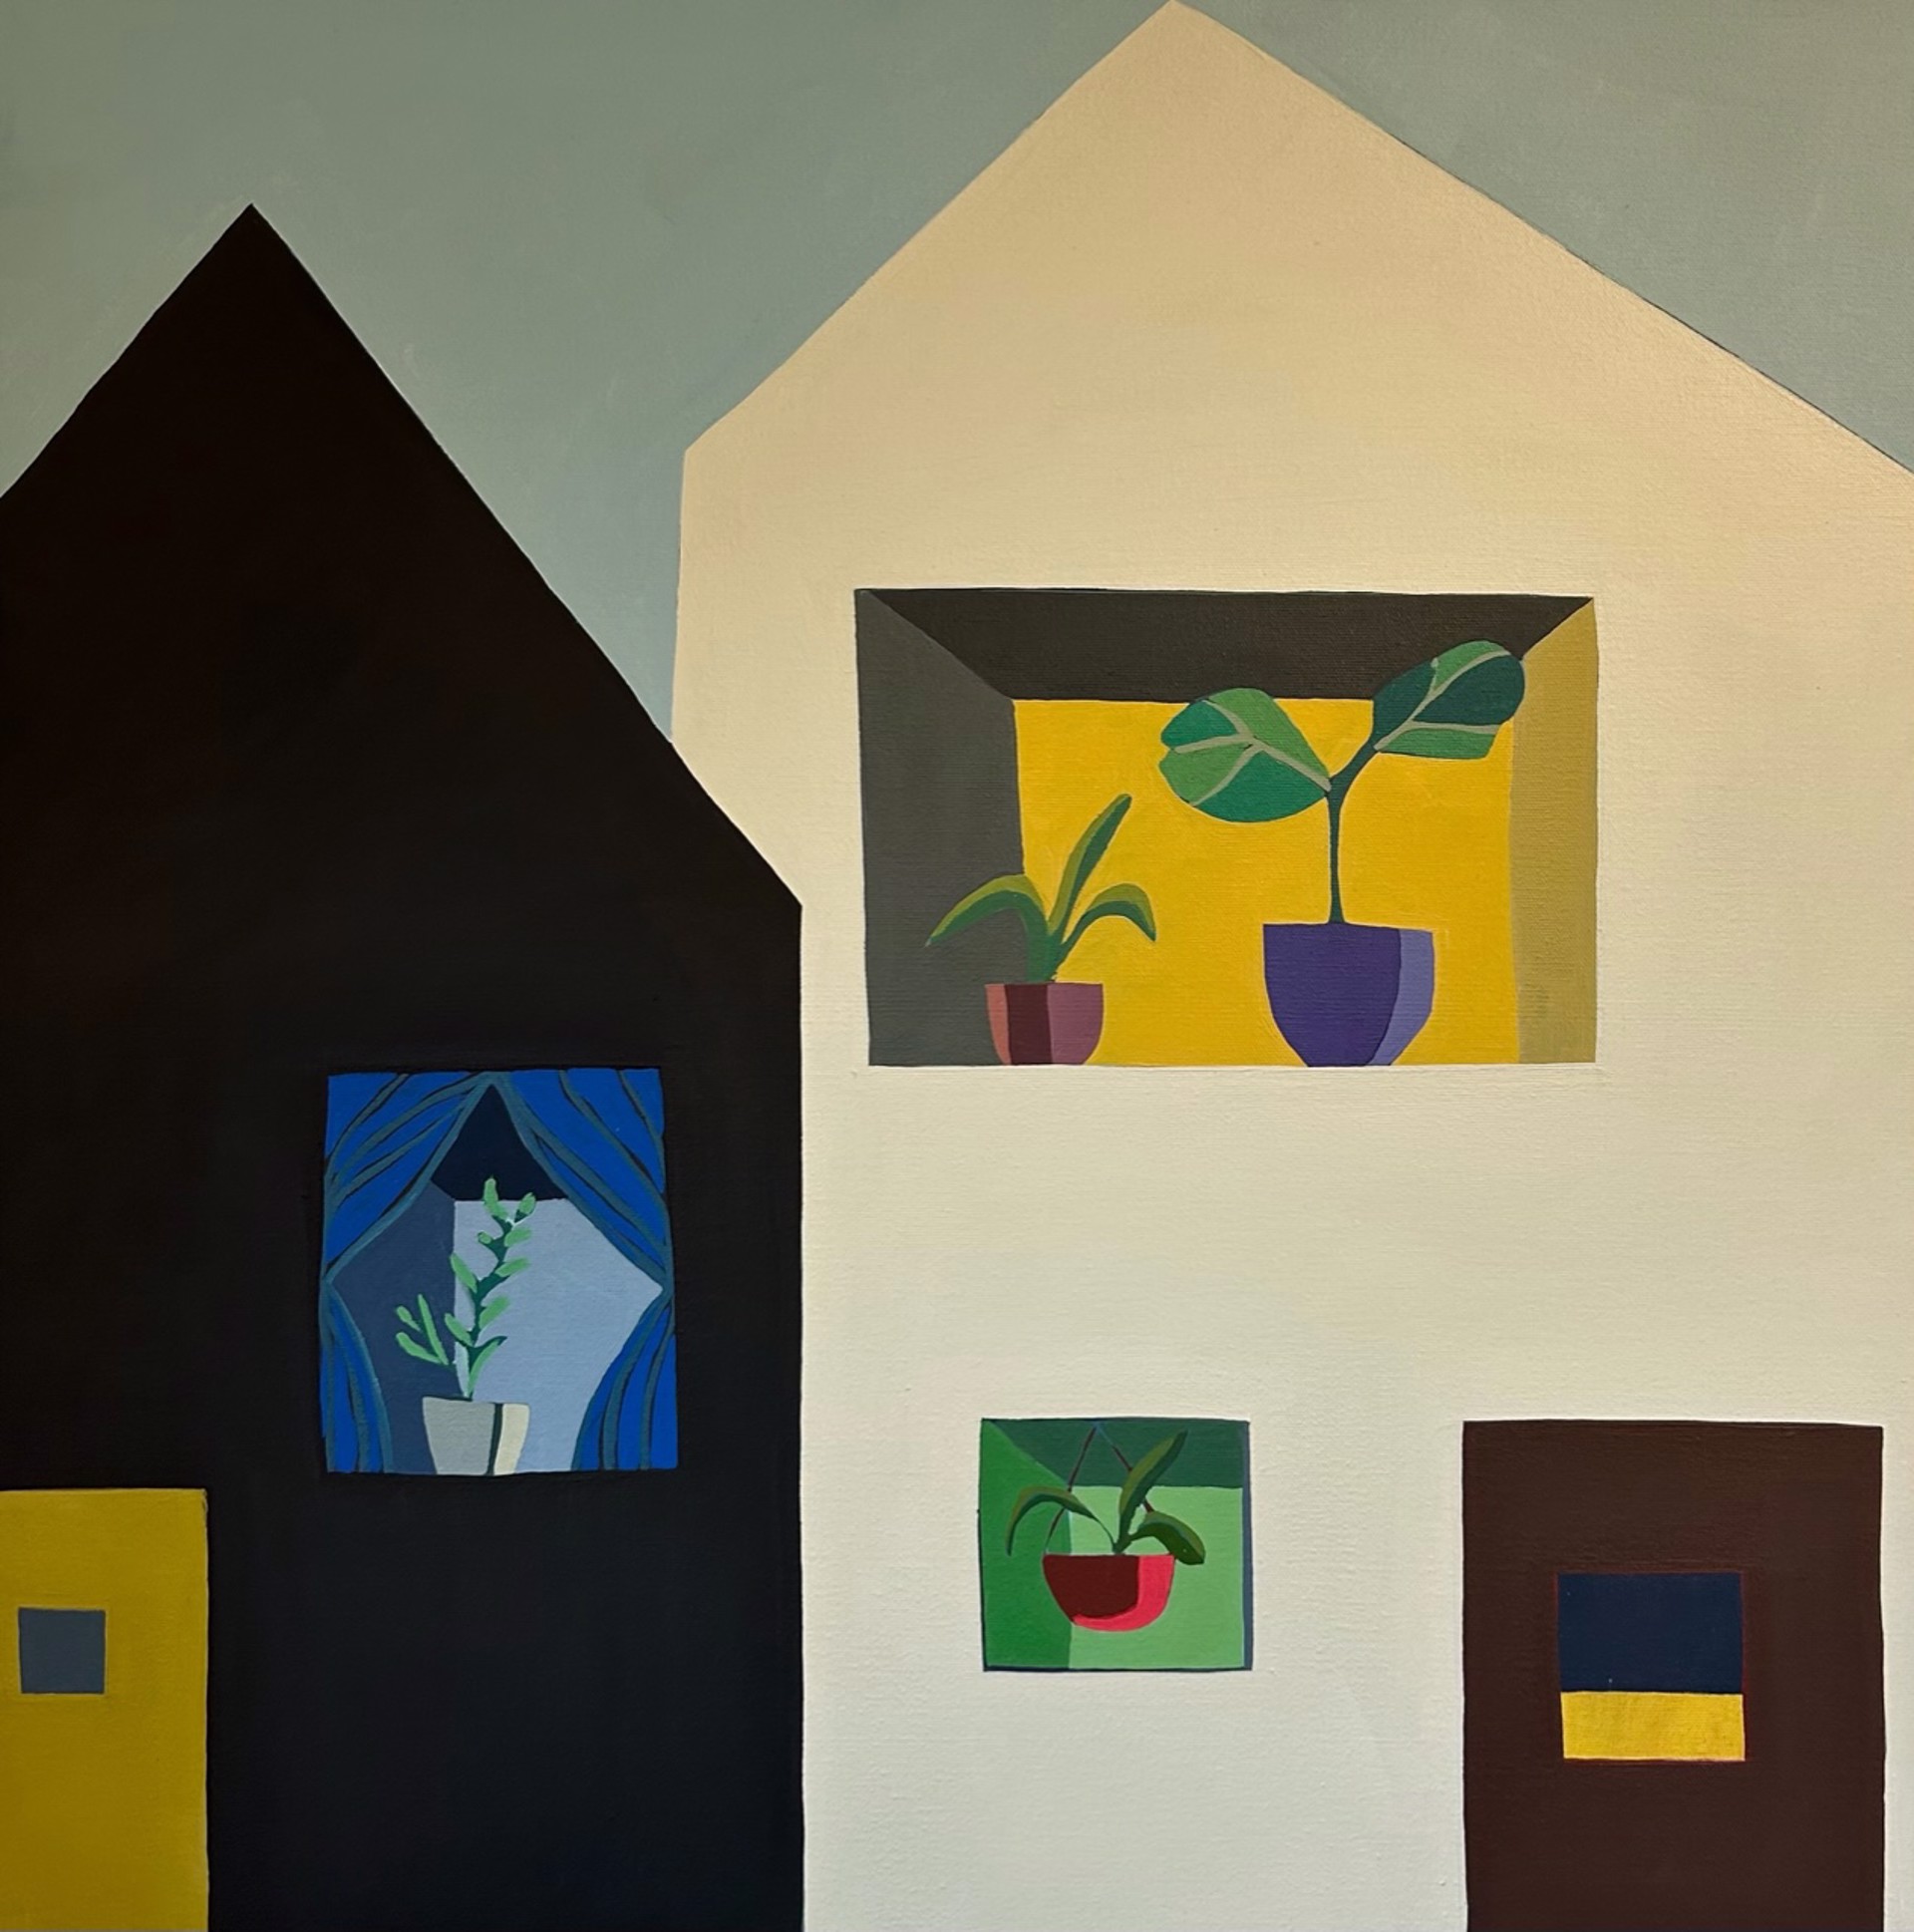 Three Windows, Two Houses by Sage Tucker-Ketcham